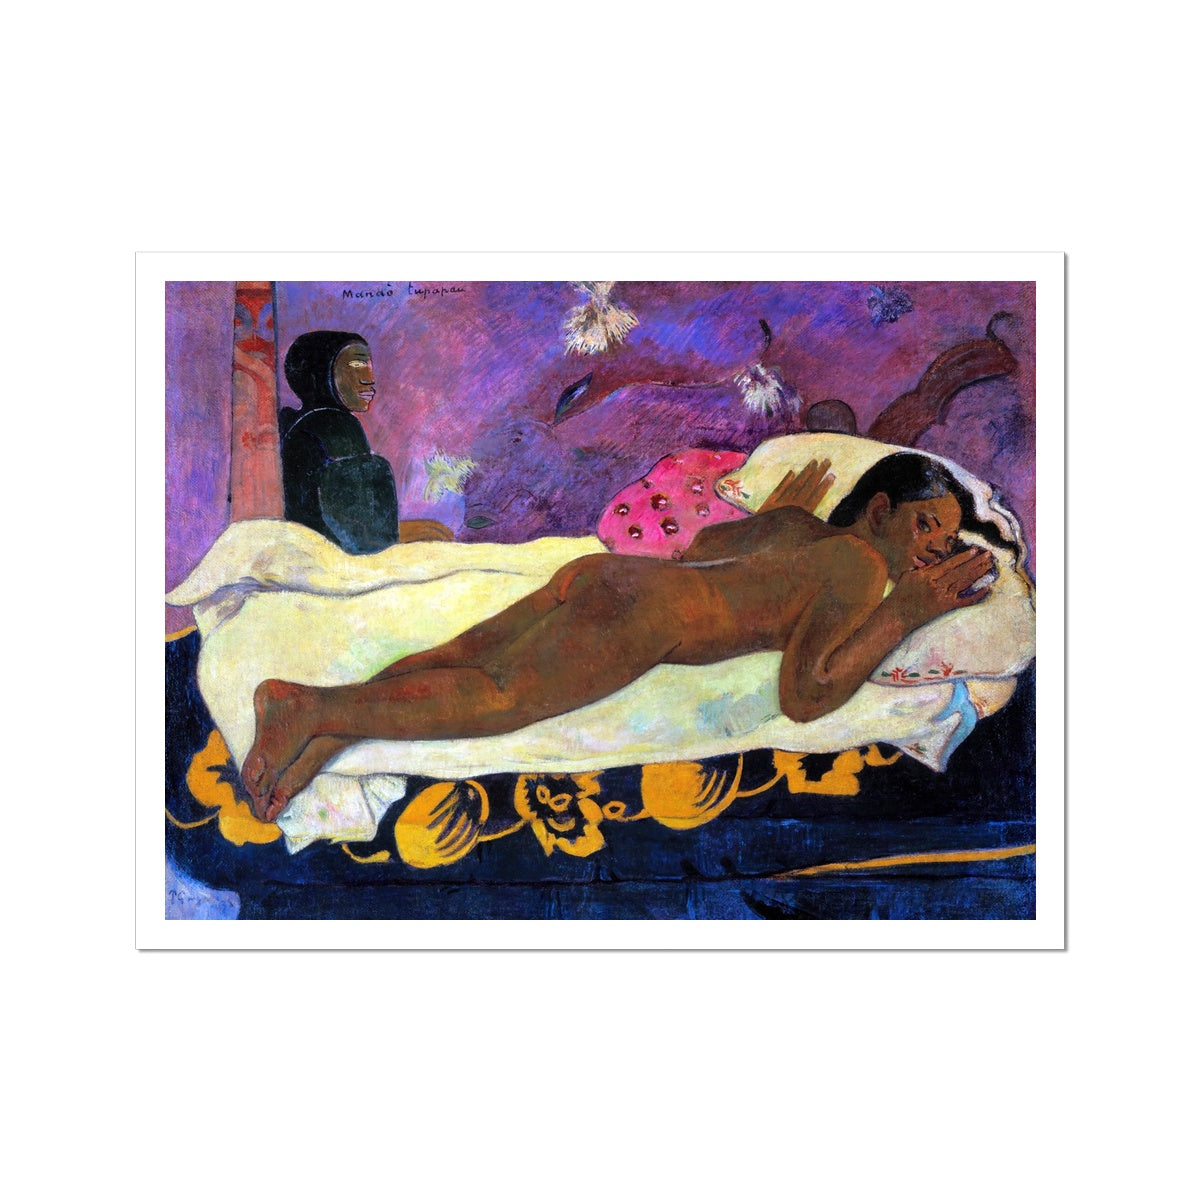 'Manao Tupapau', Spirit of the Dead by Paul Gauguin. Open Edition Fine Art Print. Art Gallery Historic Art